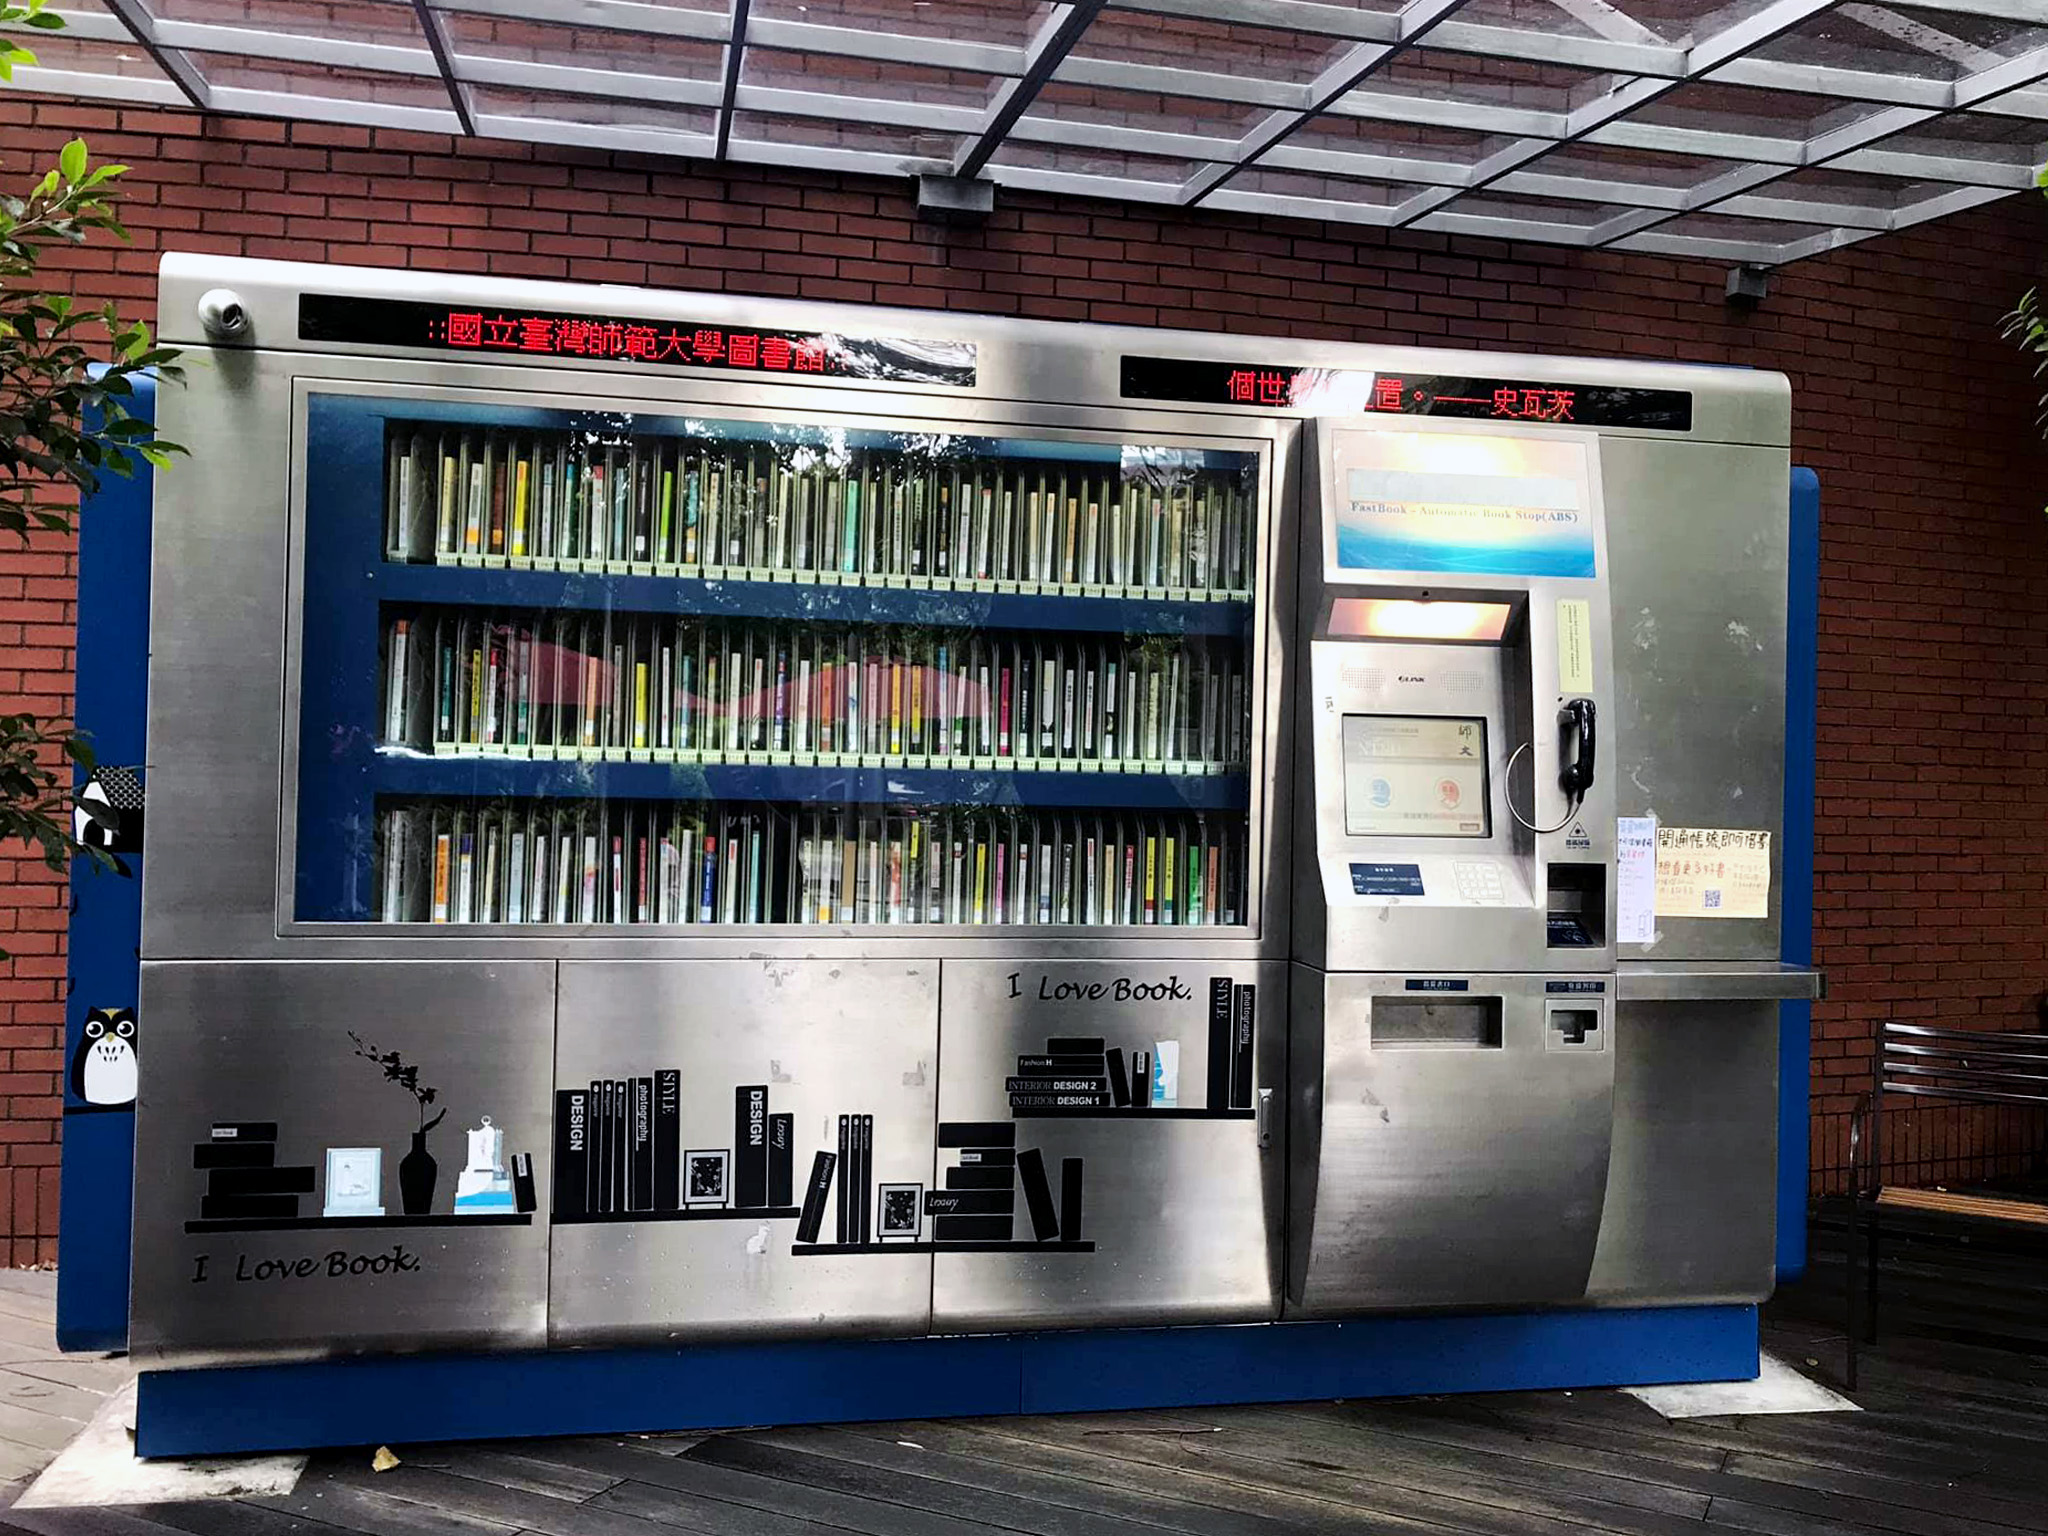 NTNU Library Lending Machine